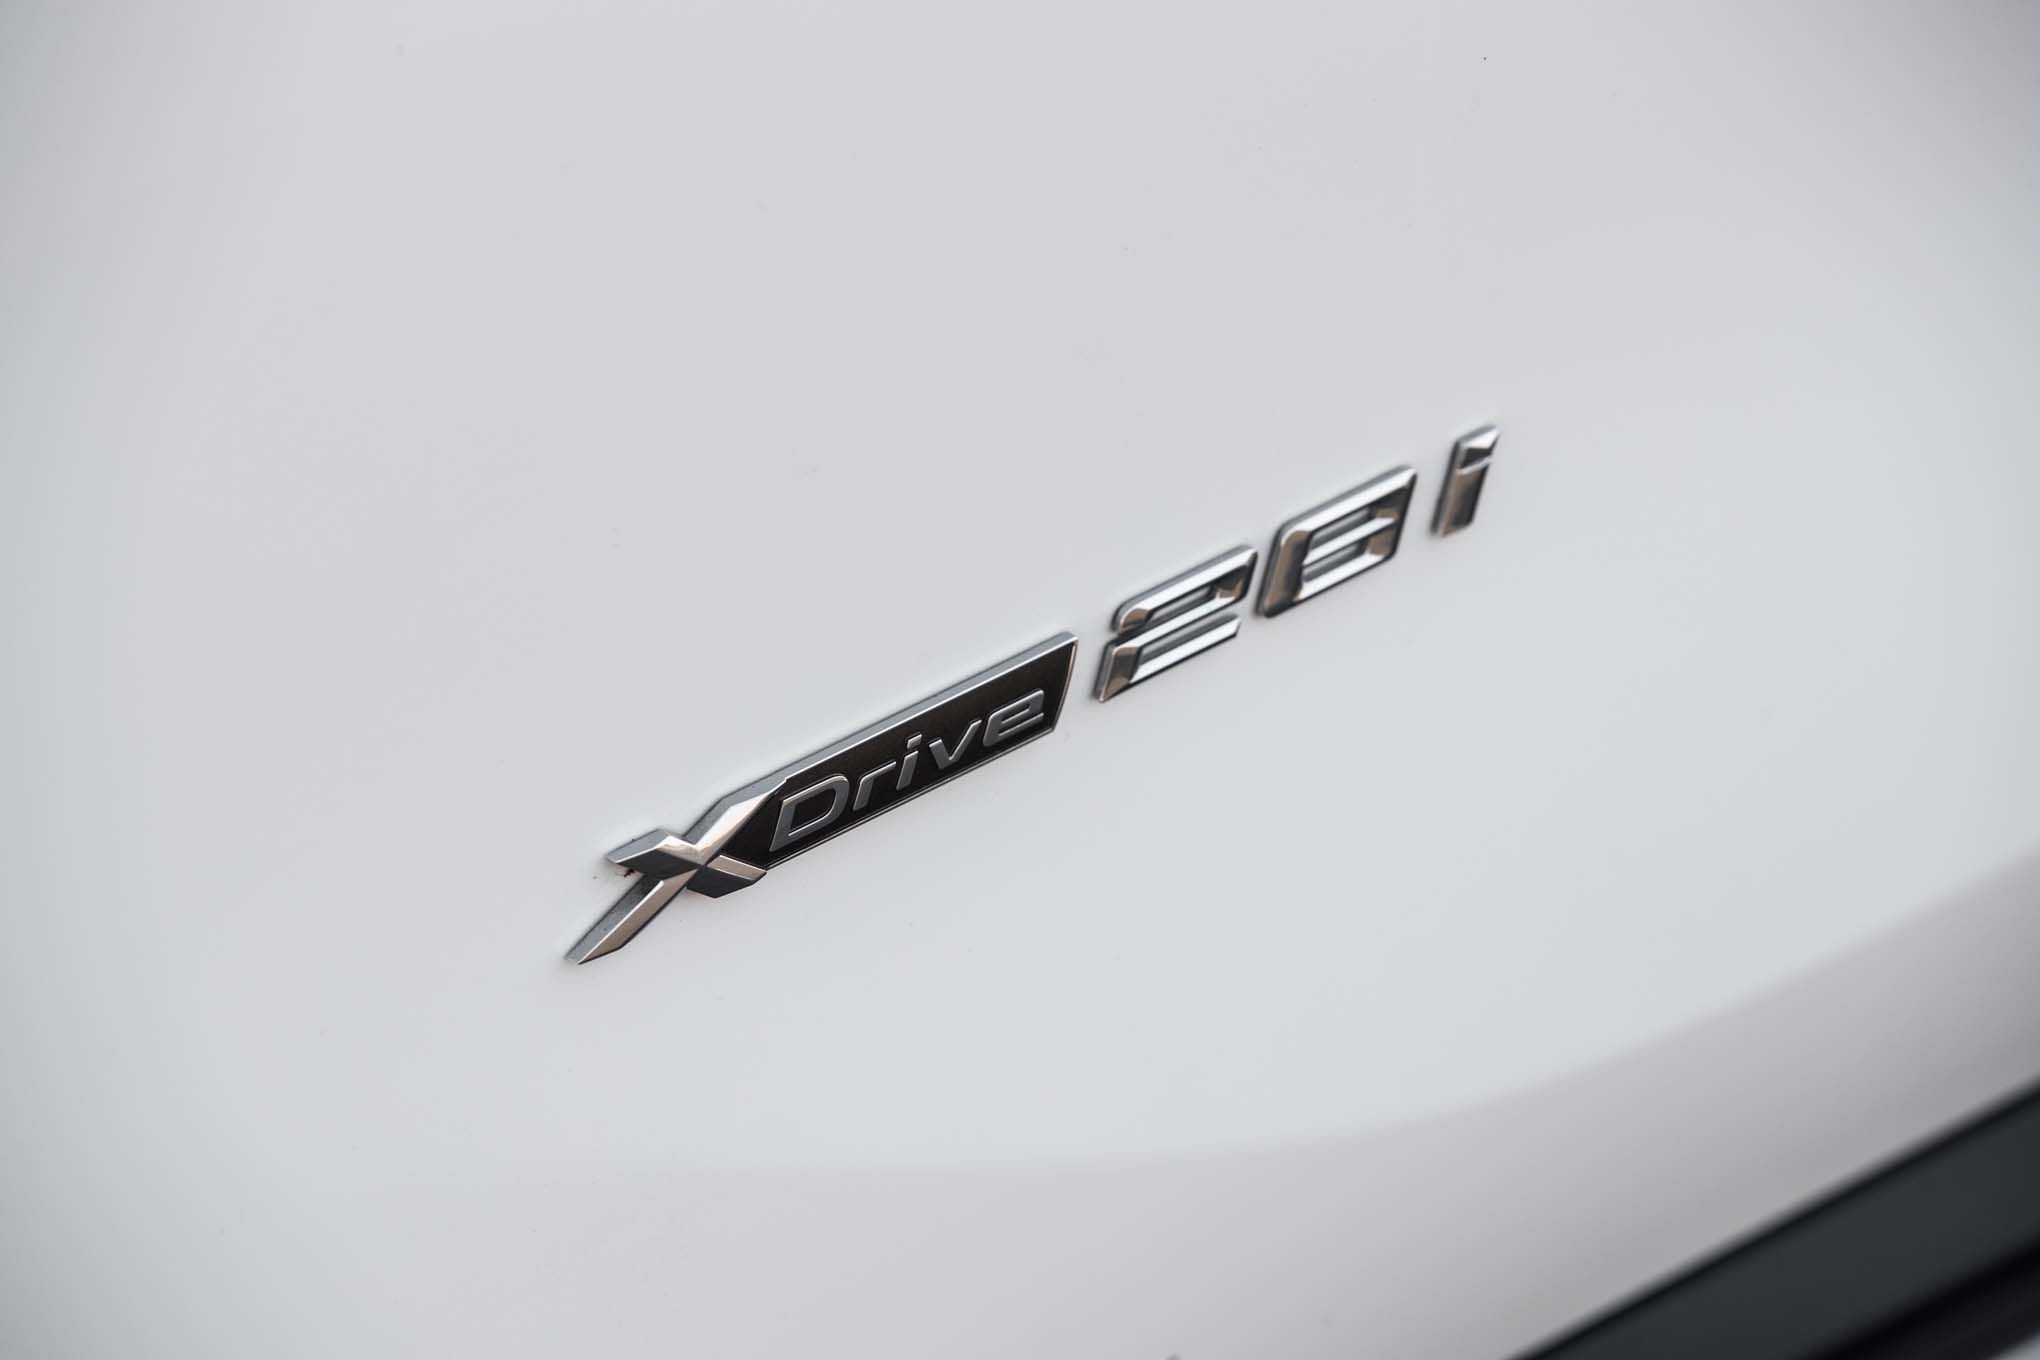 2017 Bmw X1 Xdrive28i Exterior View Rear Badge Emblem (View 20 of 23)